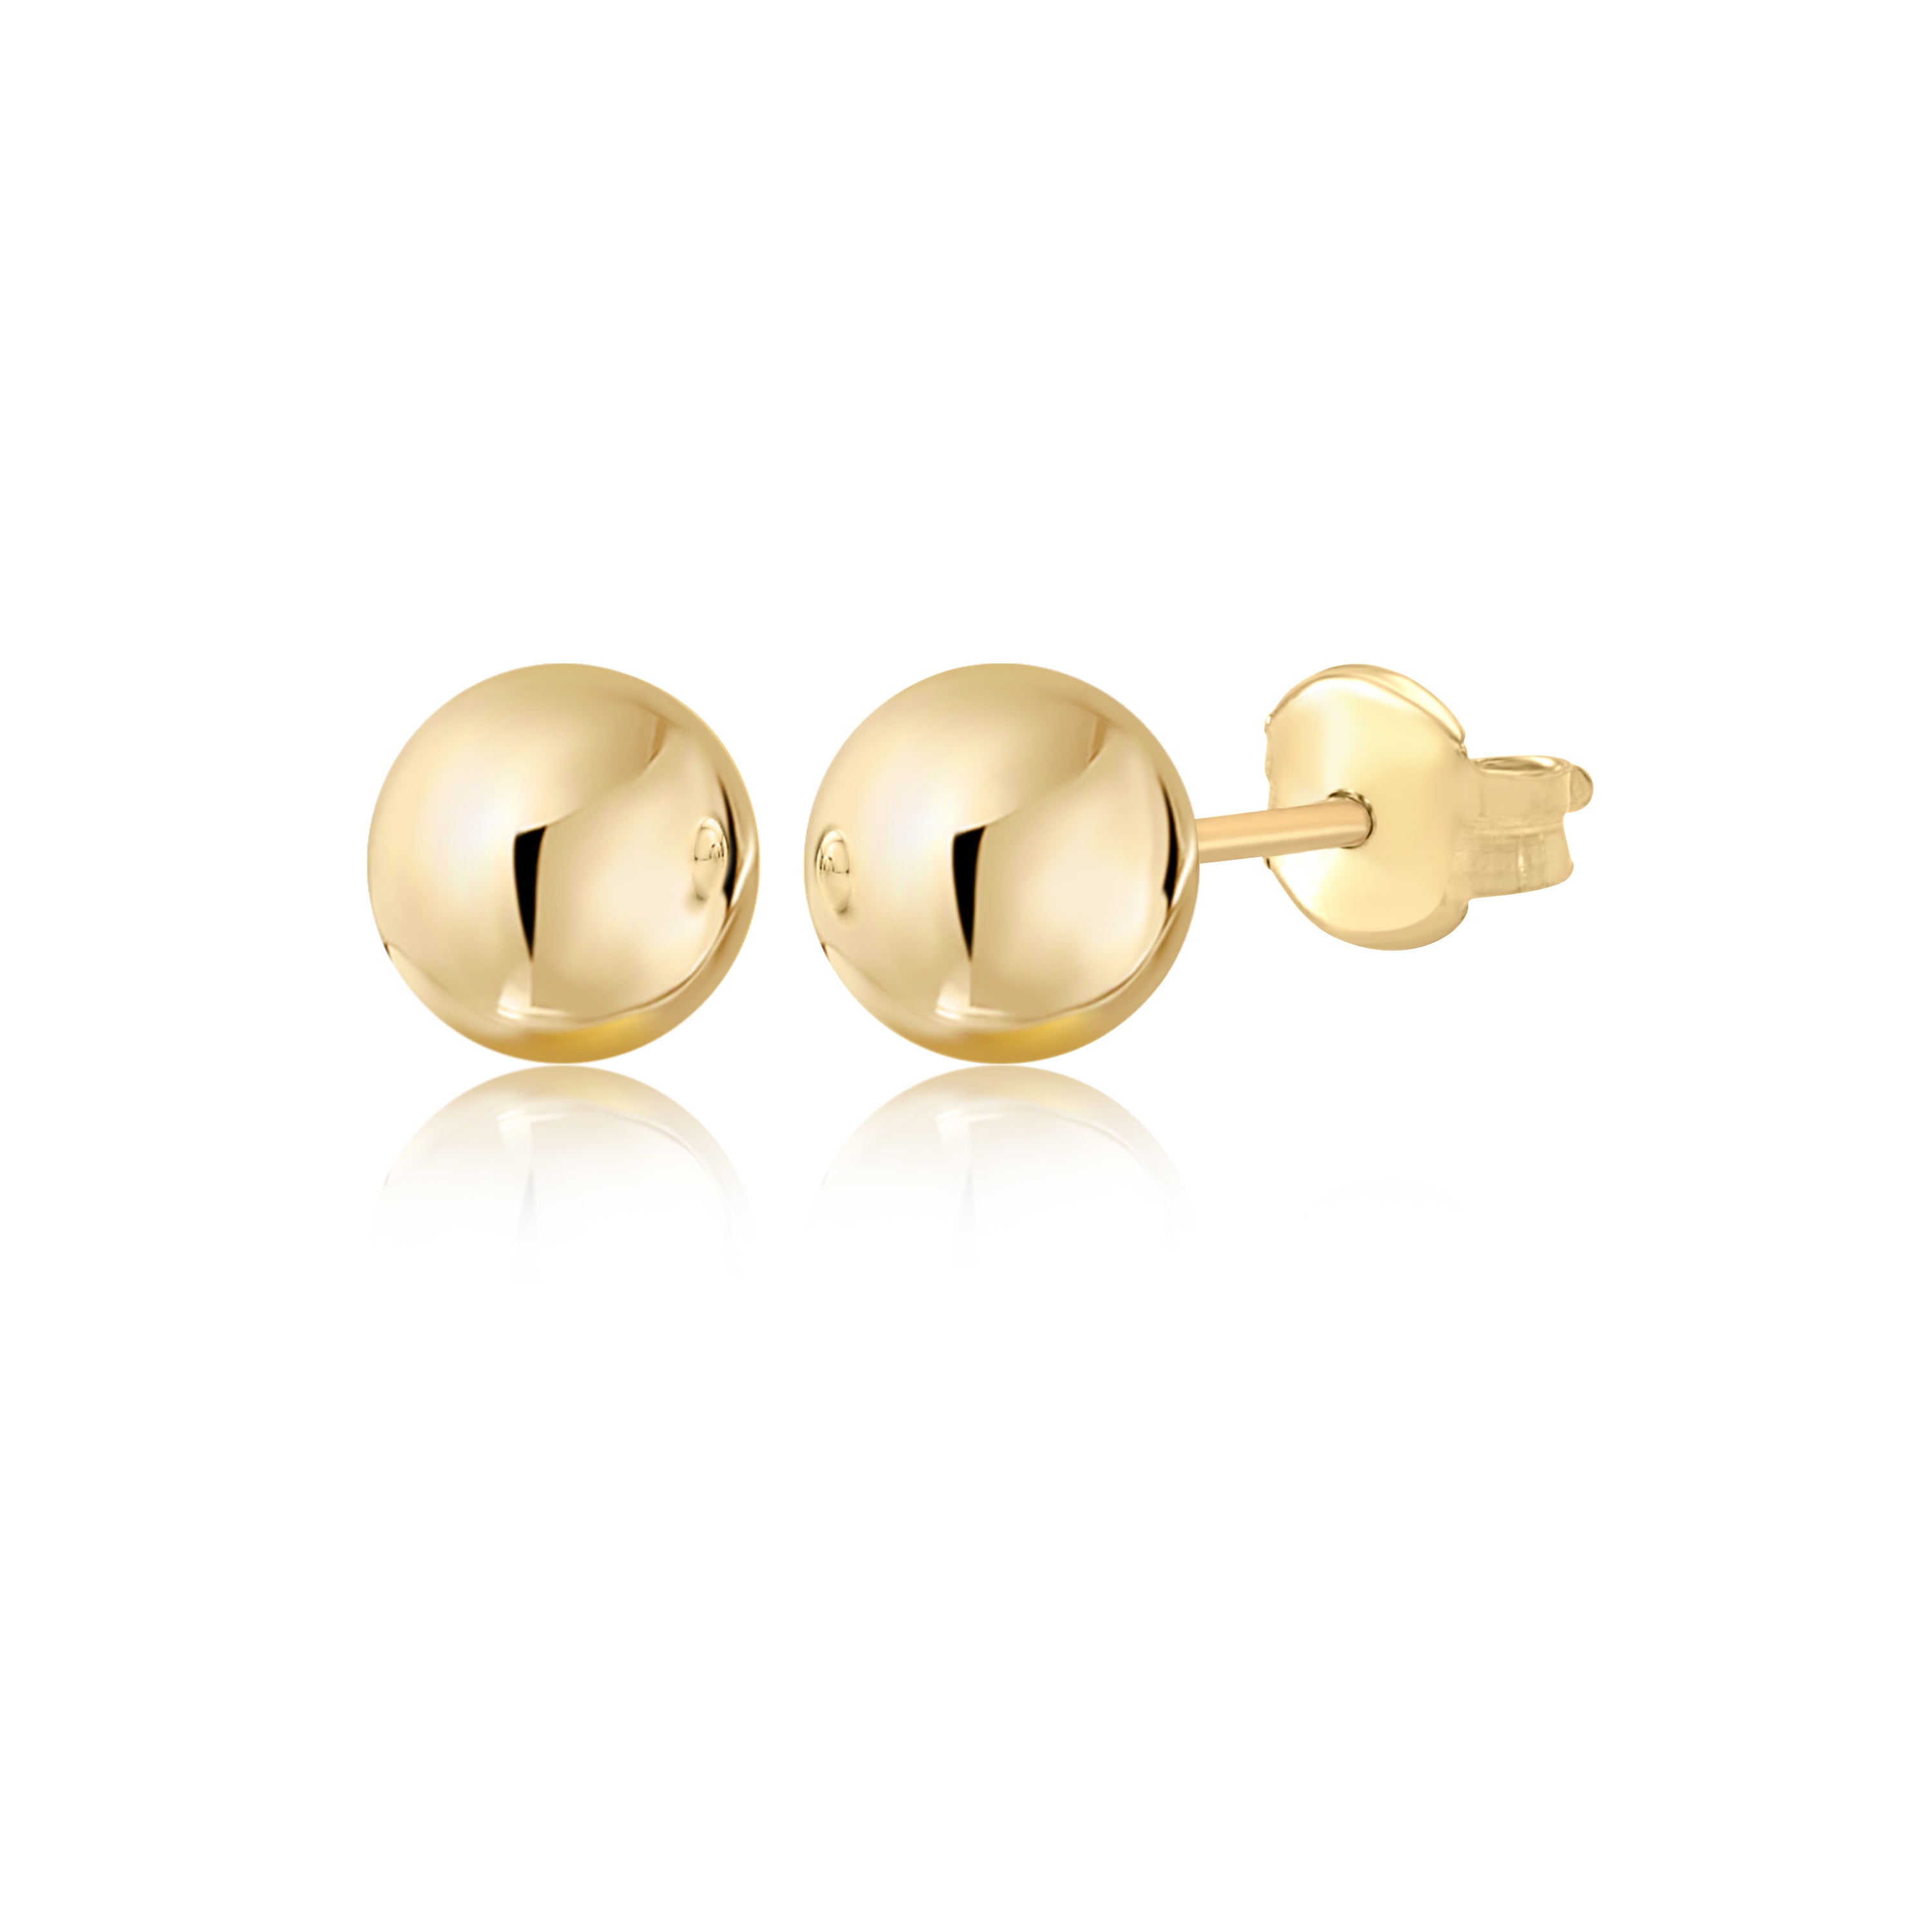 14K Yellow Gold Classic Ball Stud Earrings with Screwbacks